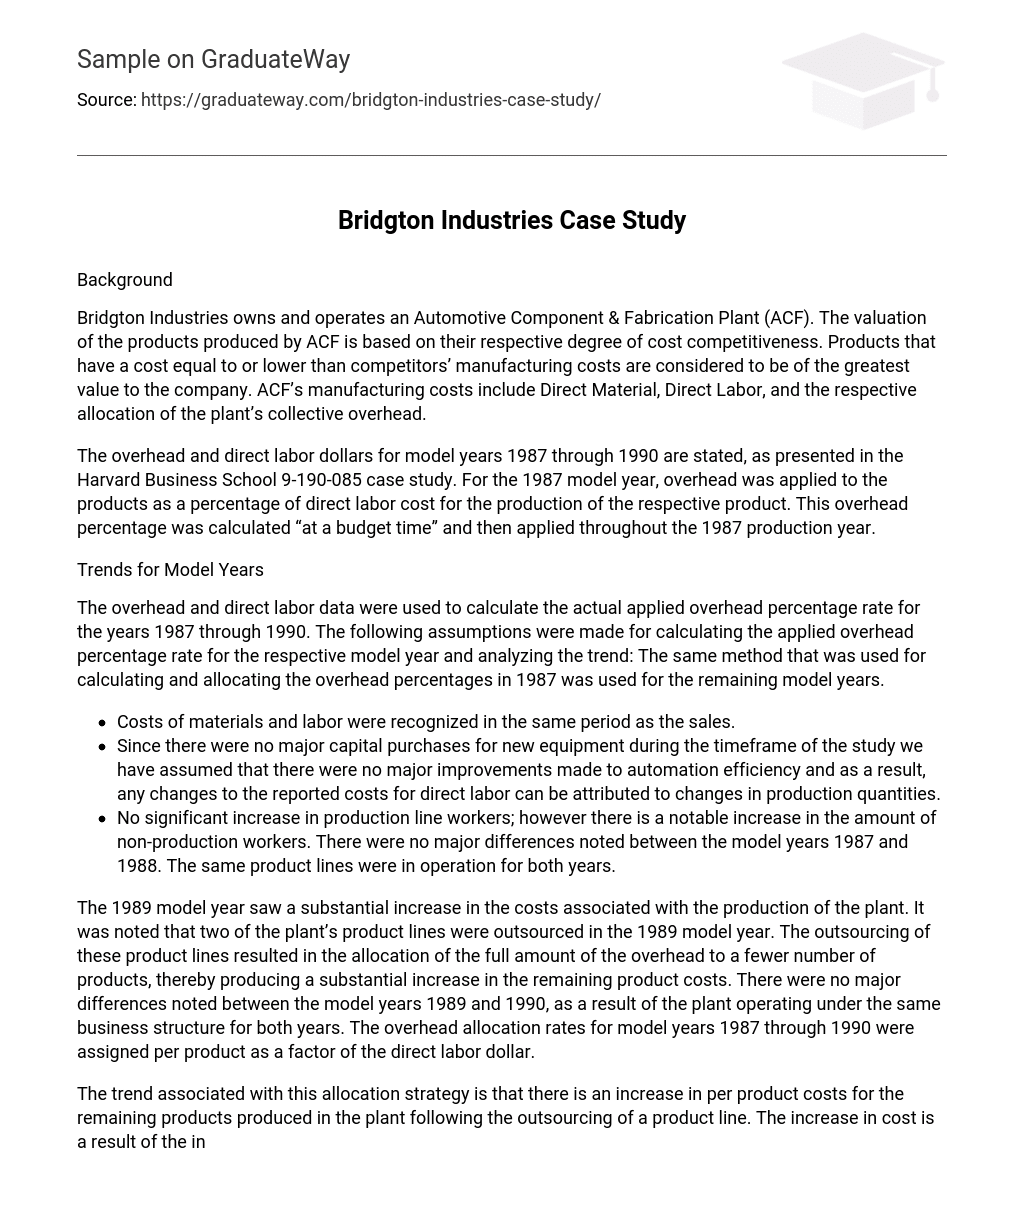 Bridgton Industries Case Study